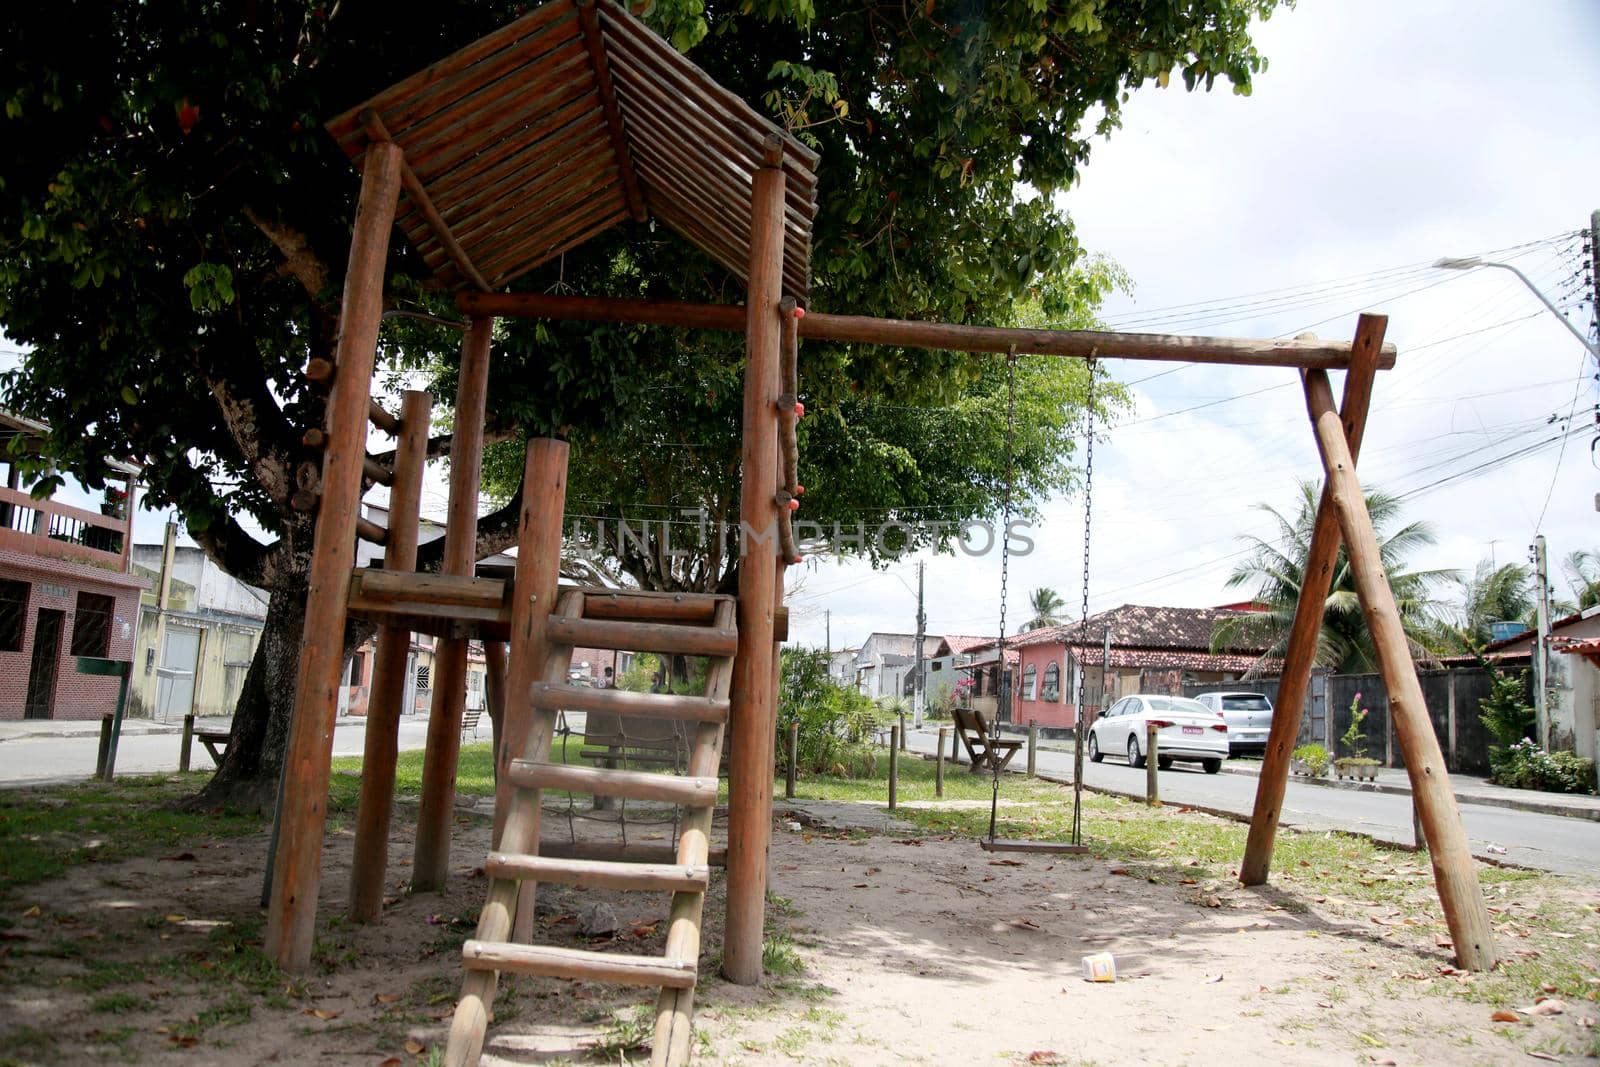 mata de sao joao, bahia, brazil - october 24, 2020: empty children's playground due to the covid-19 pandamira in the city of Mata de Sao Joao